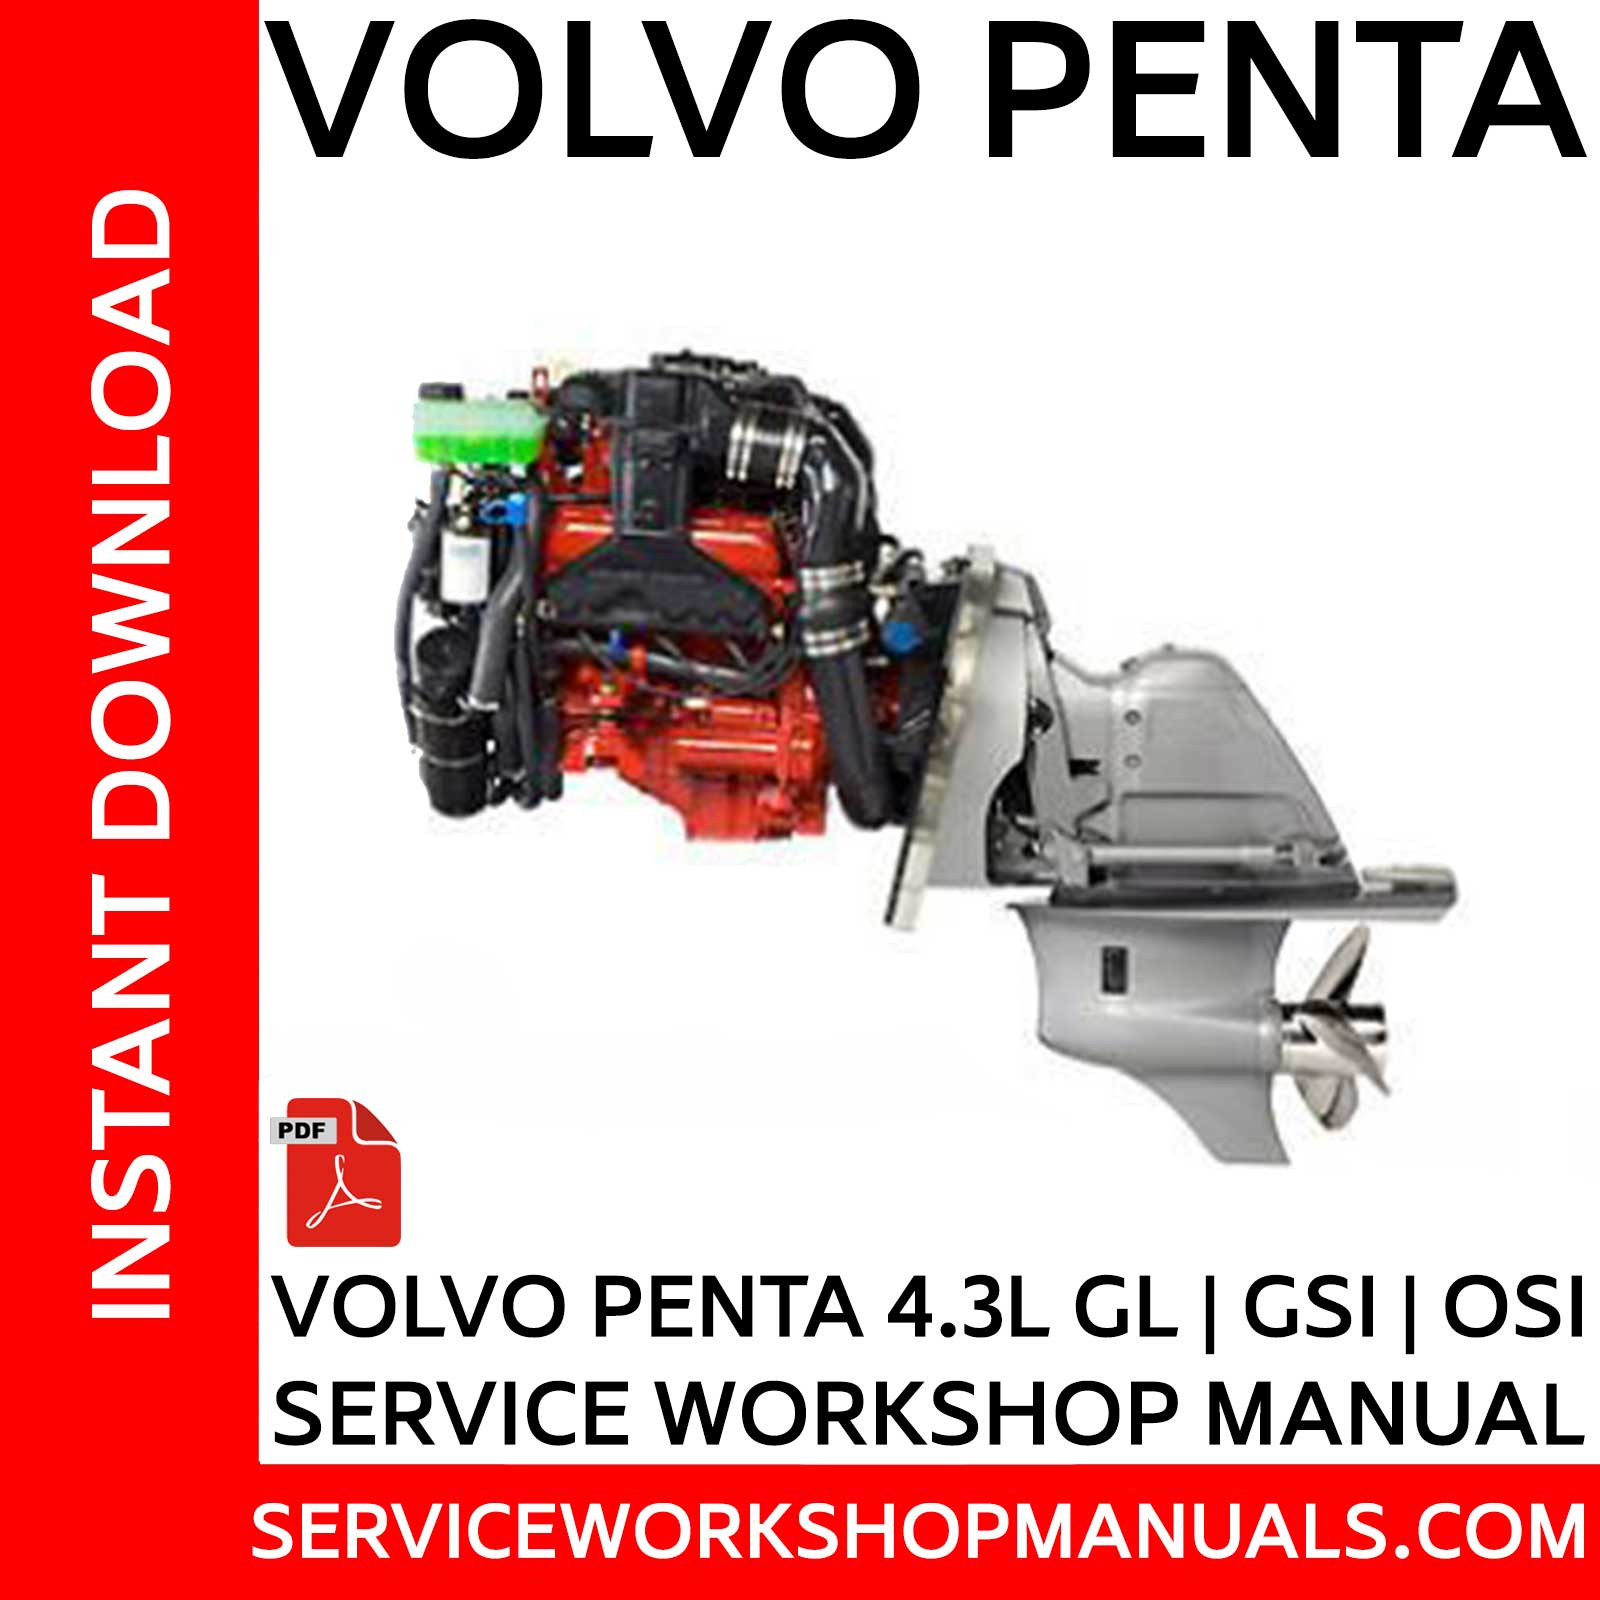 4.3 L Volvo Penta Belt Diagram Volvo Penta 4.3l Gl, Gsi, Osi, Engine Service Workshop Manual … Of 4.3 L Volvo Penta Belt Diagram